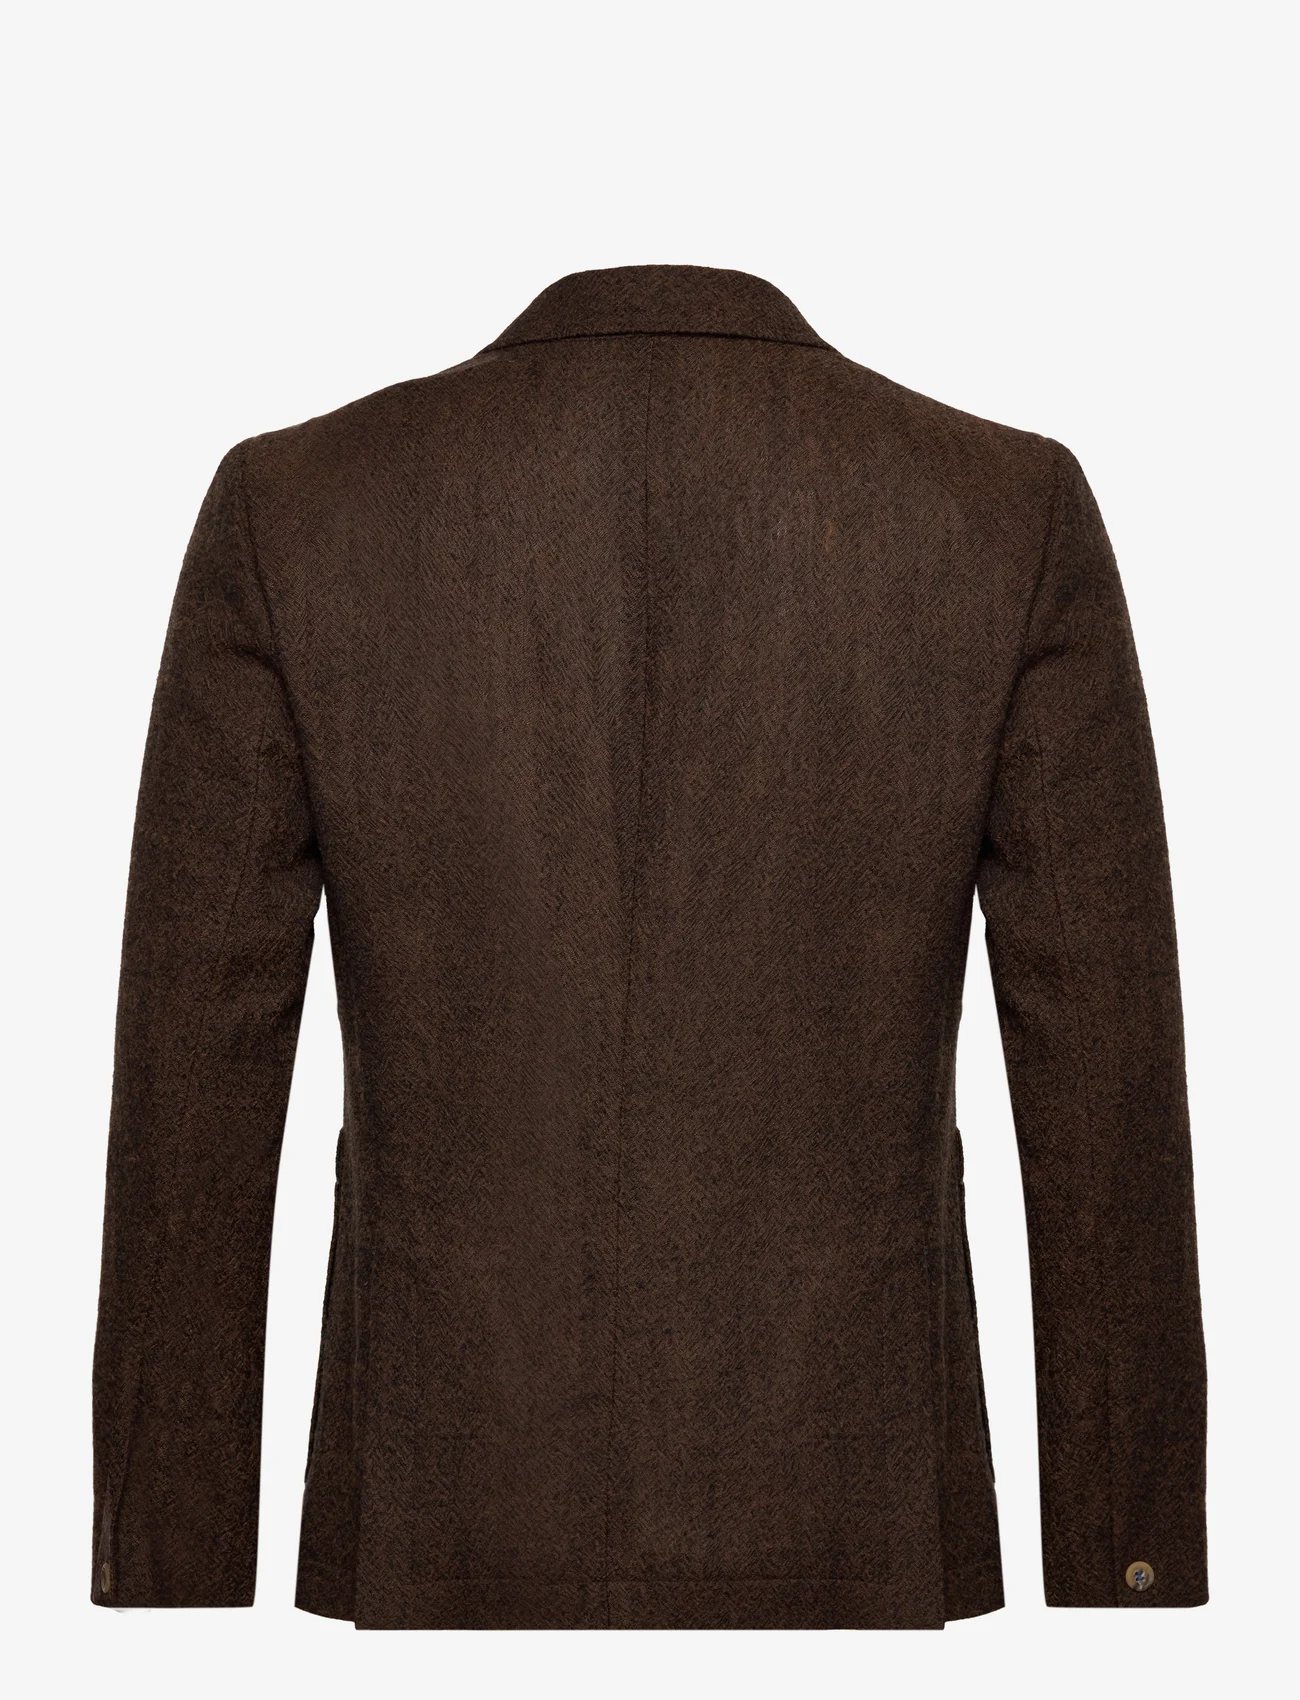 FRENN - Jere Wool Jacket - Žaketes ar divrindu pogājumu - brown - 1